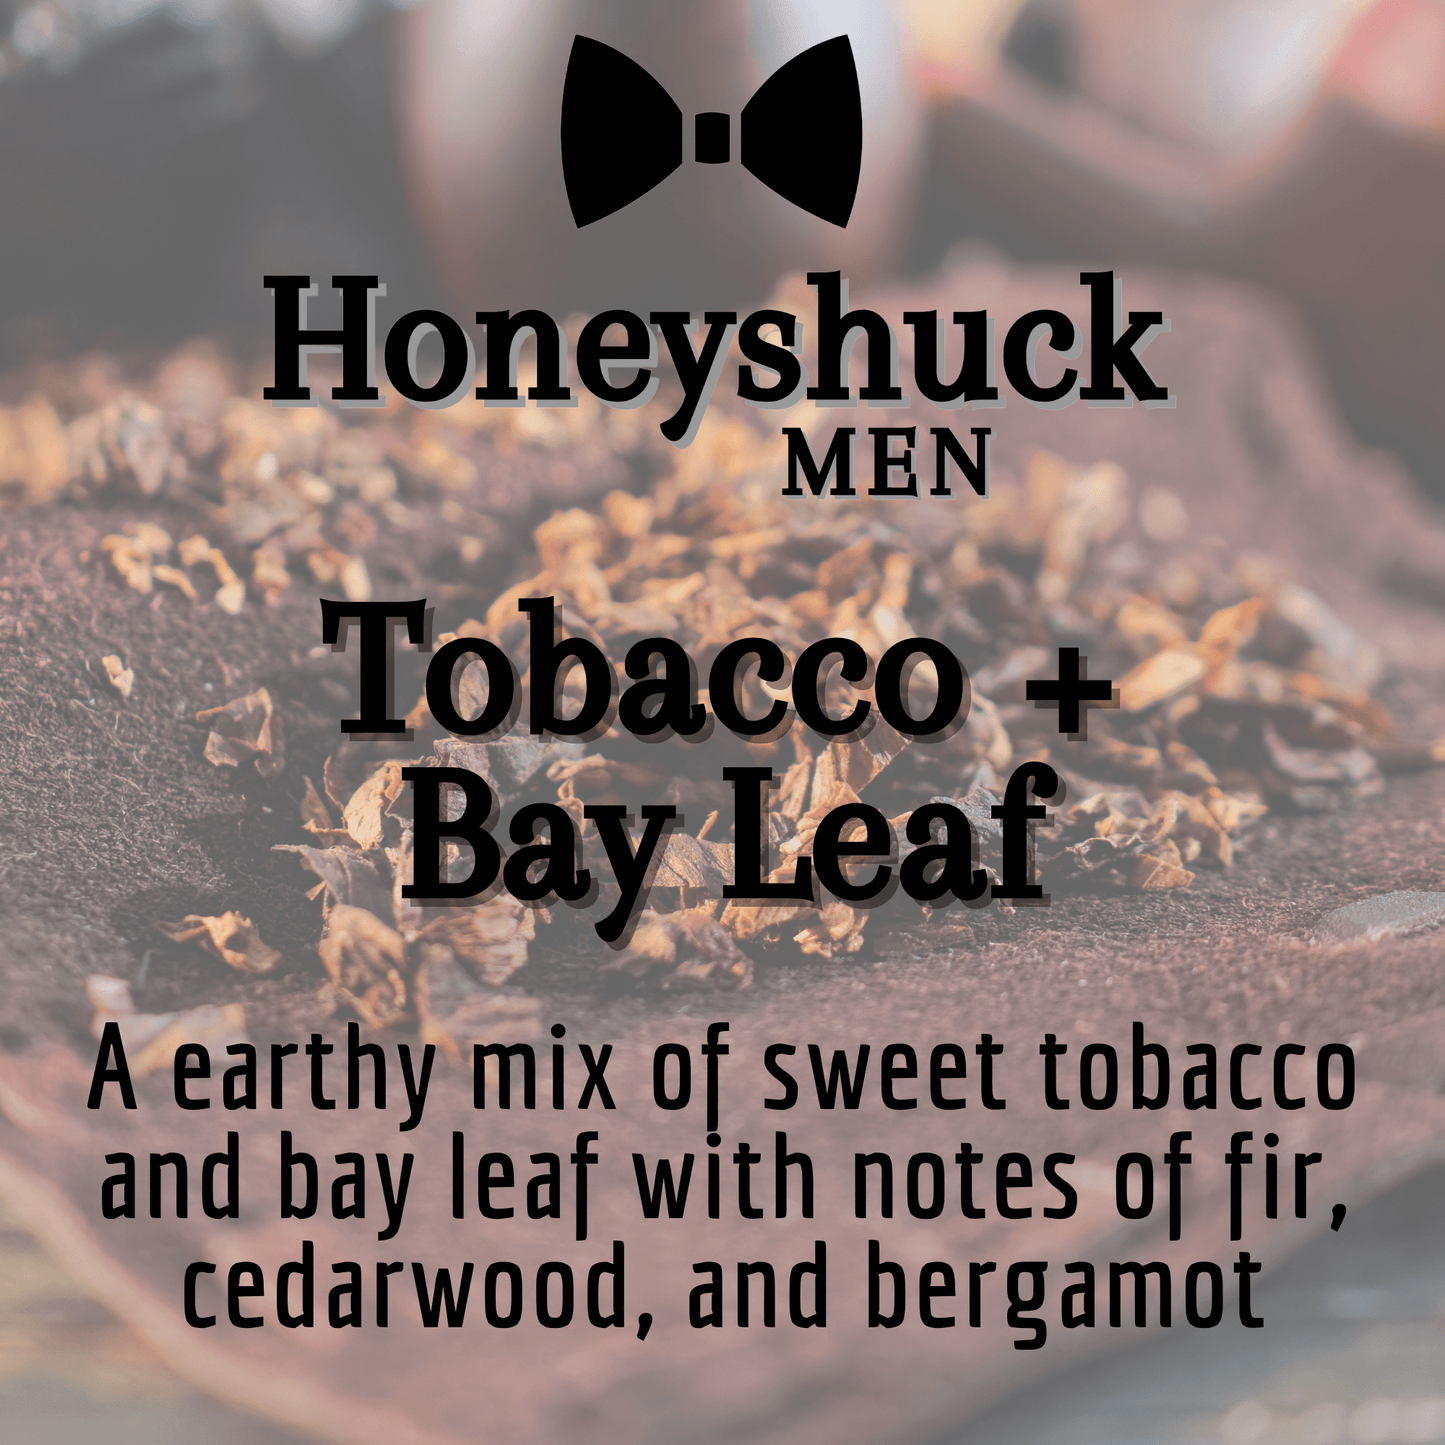 Men's Whipped Body Butter | Tobacco + Bay Leaf | Vegan